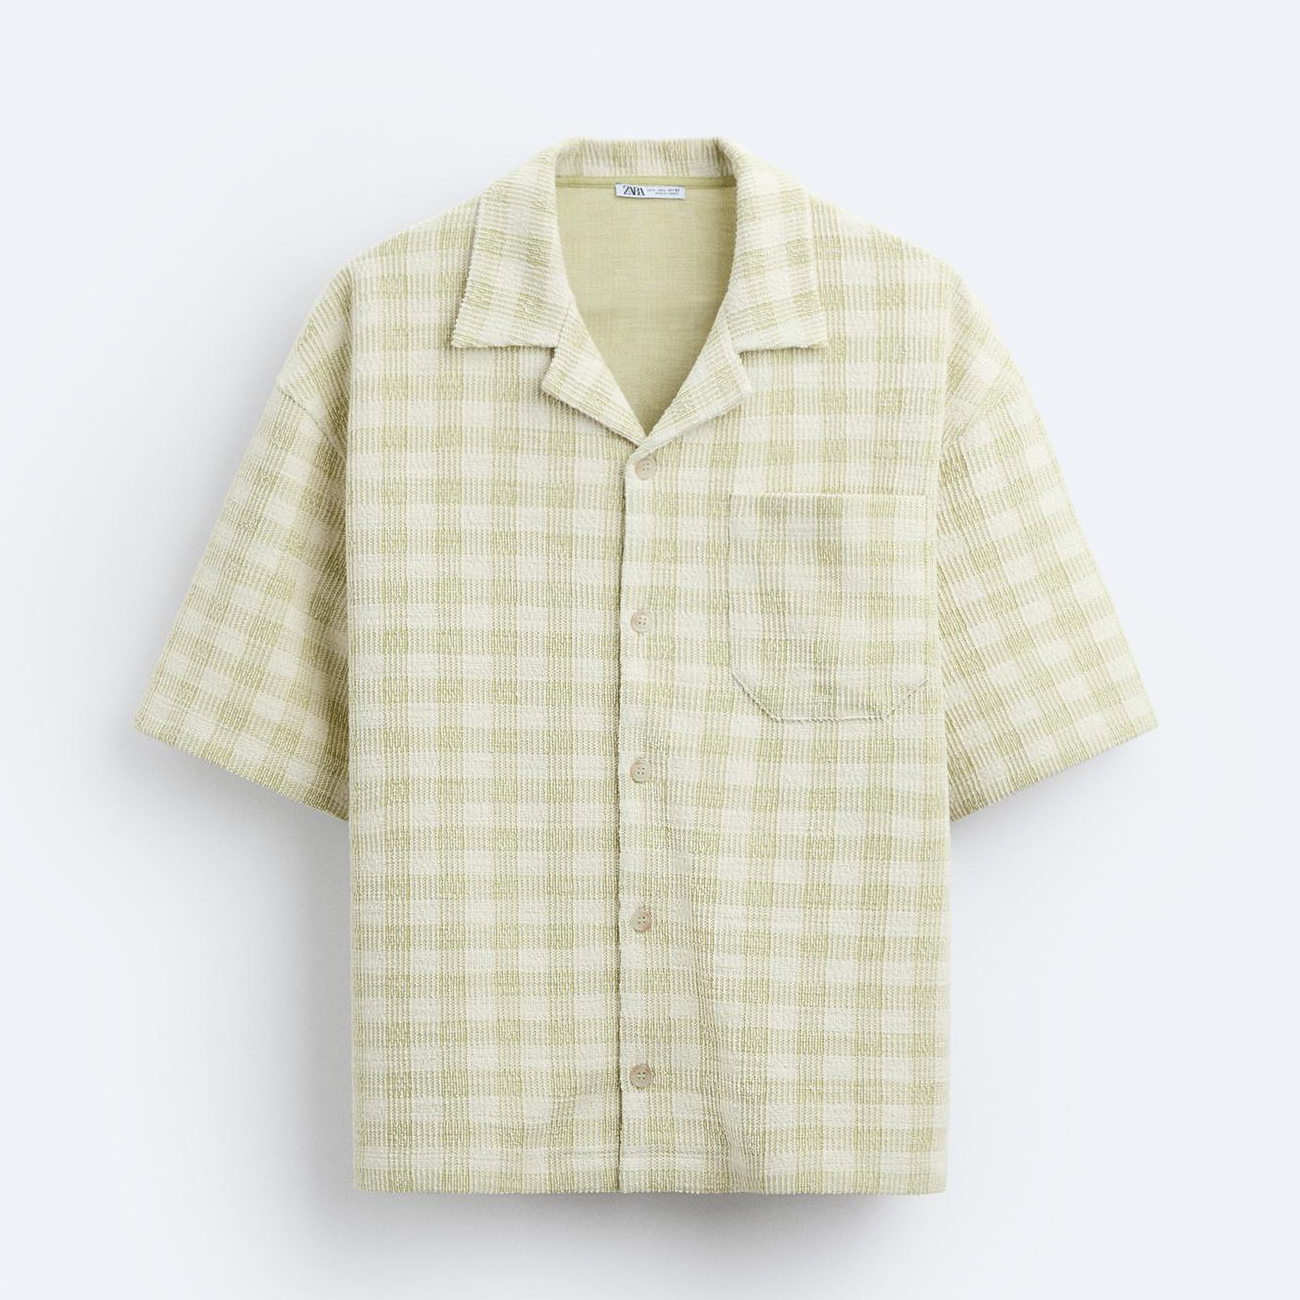 Рубашка Zara Textured Check, зеленый/экрю рубашка zara kids check зеленый черный